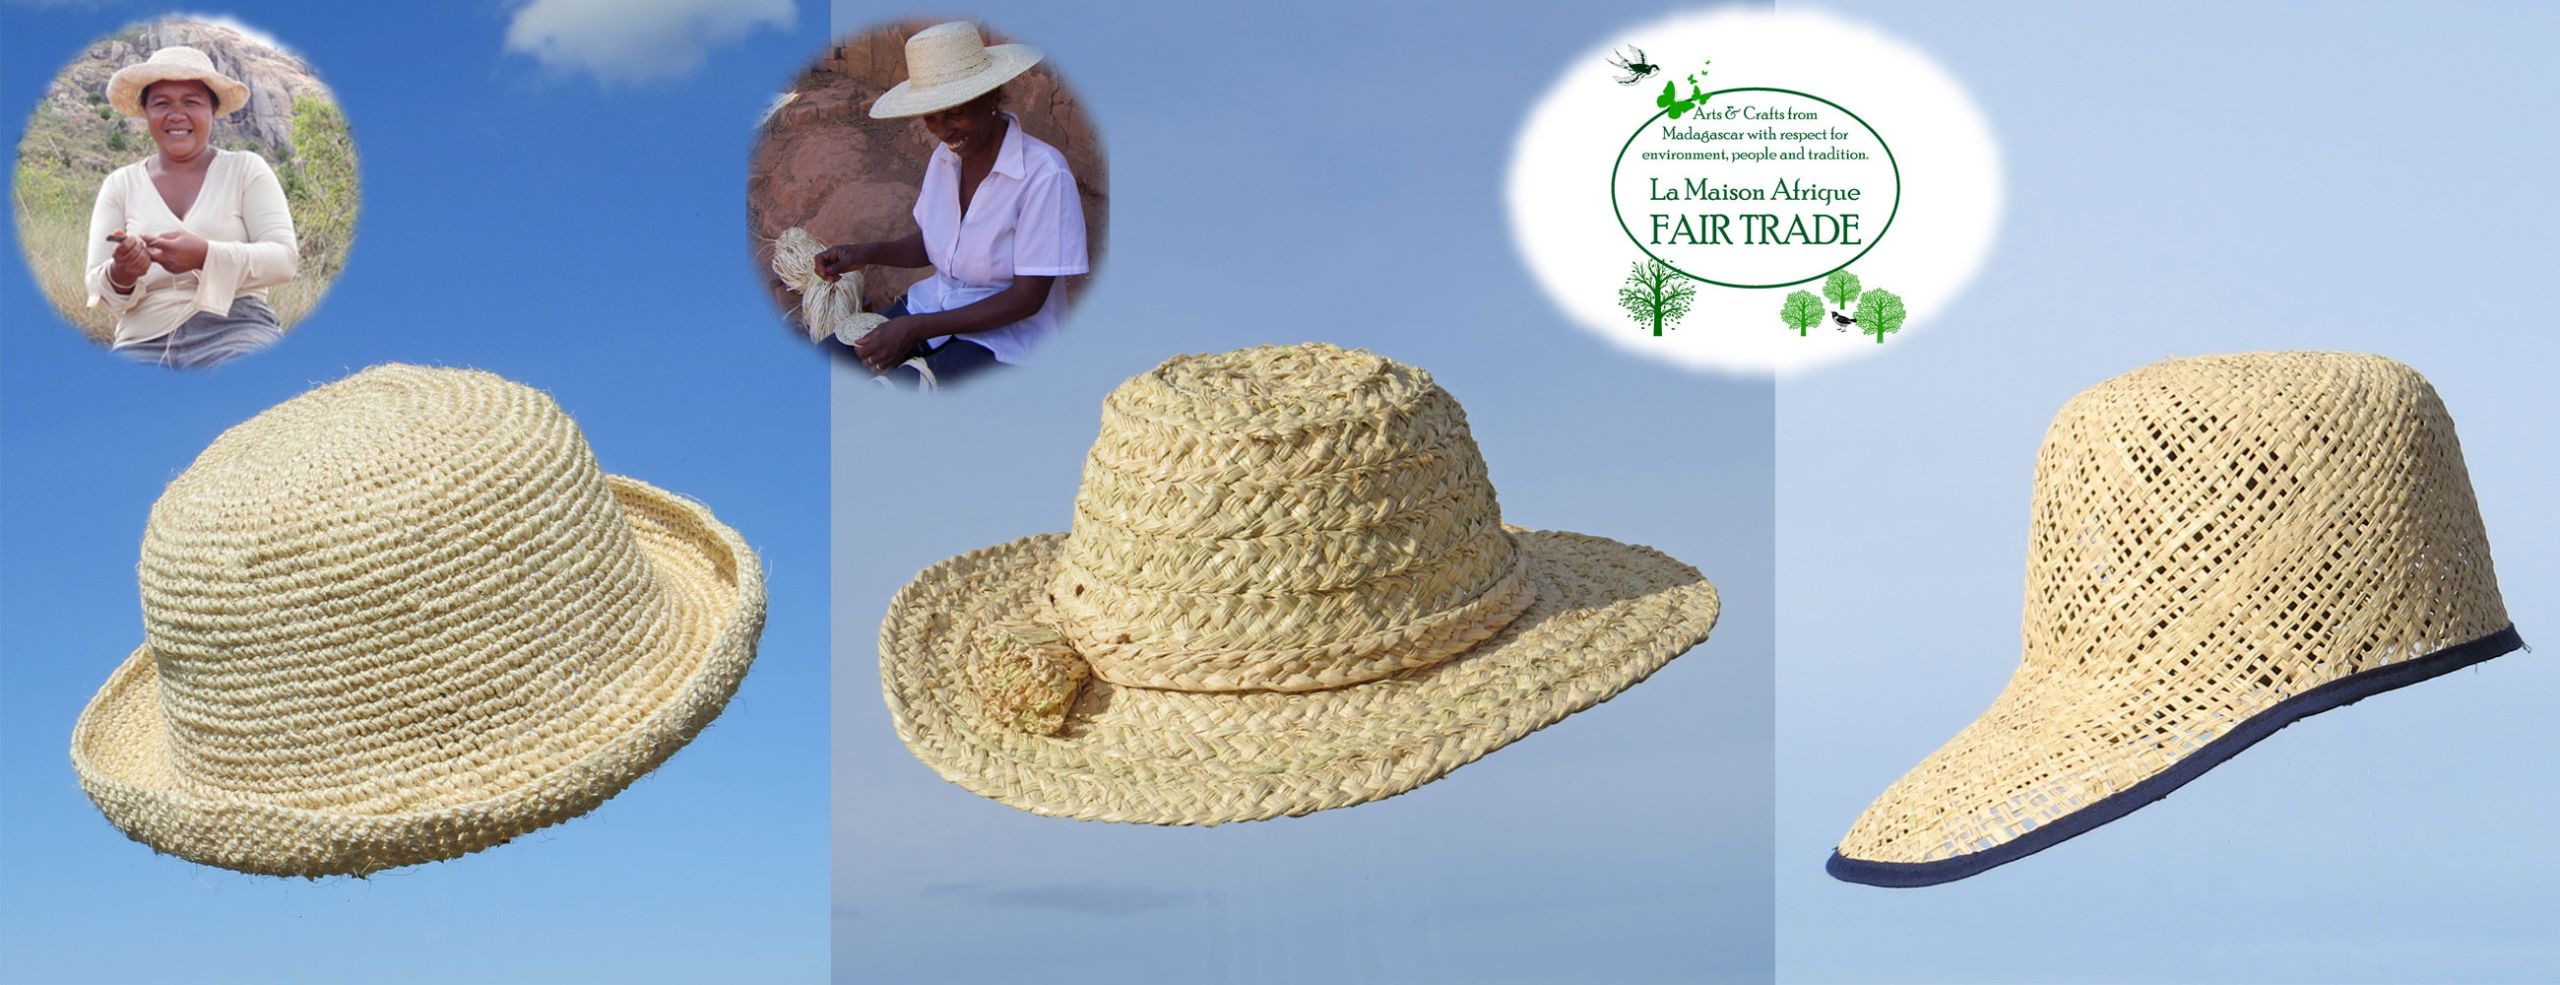 Fair Trade hats